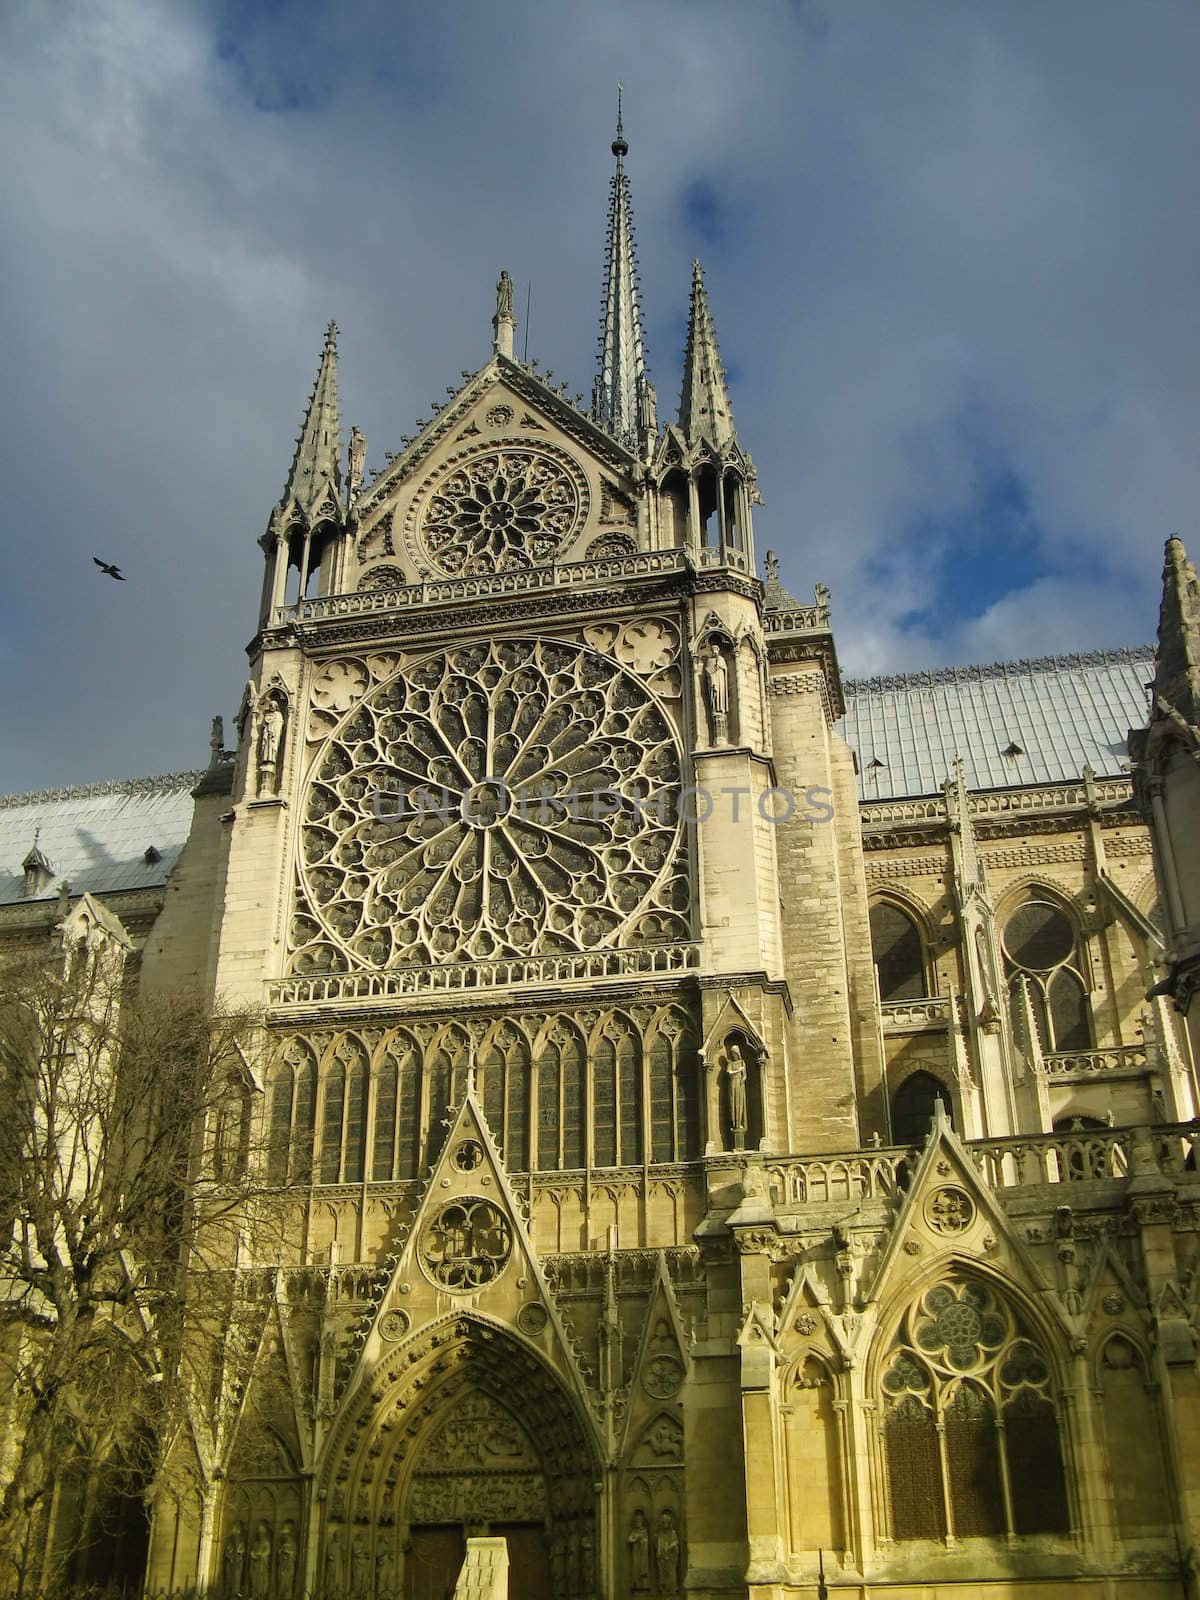 Ledt side entrance of the Notre-Dame Cathedral in Paris